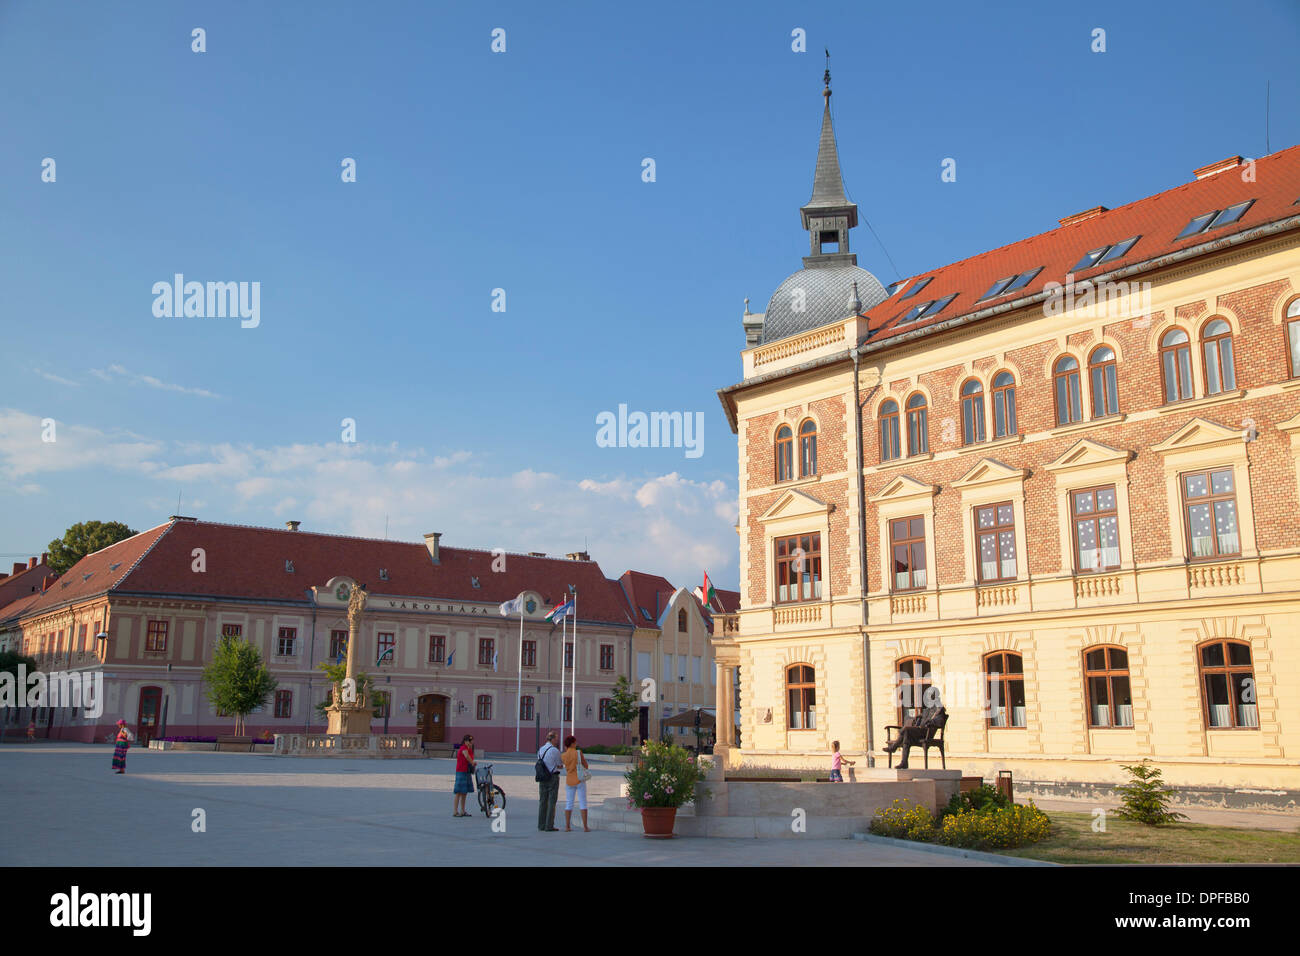 Place principale, Keszthely, Lake Balaton, Hungary, Europe Banque D'Images